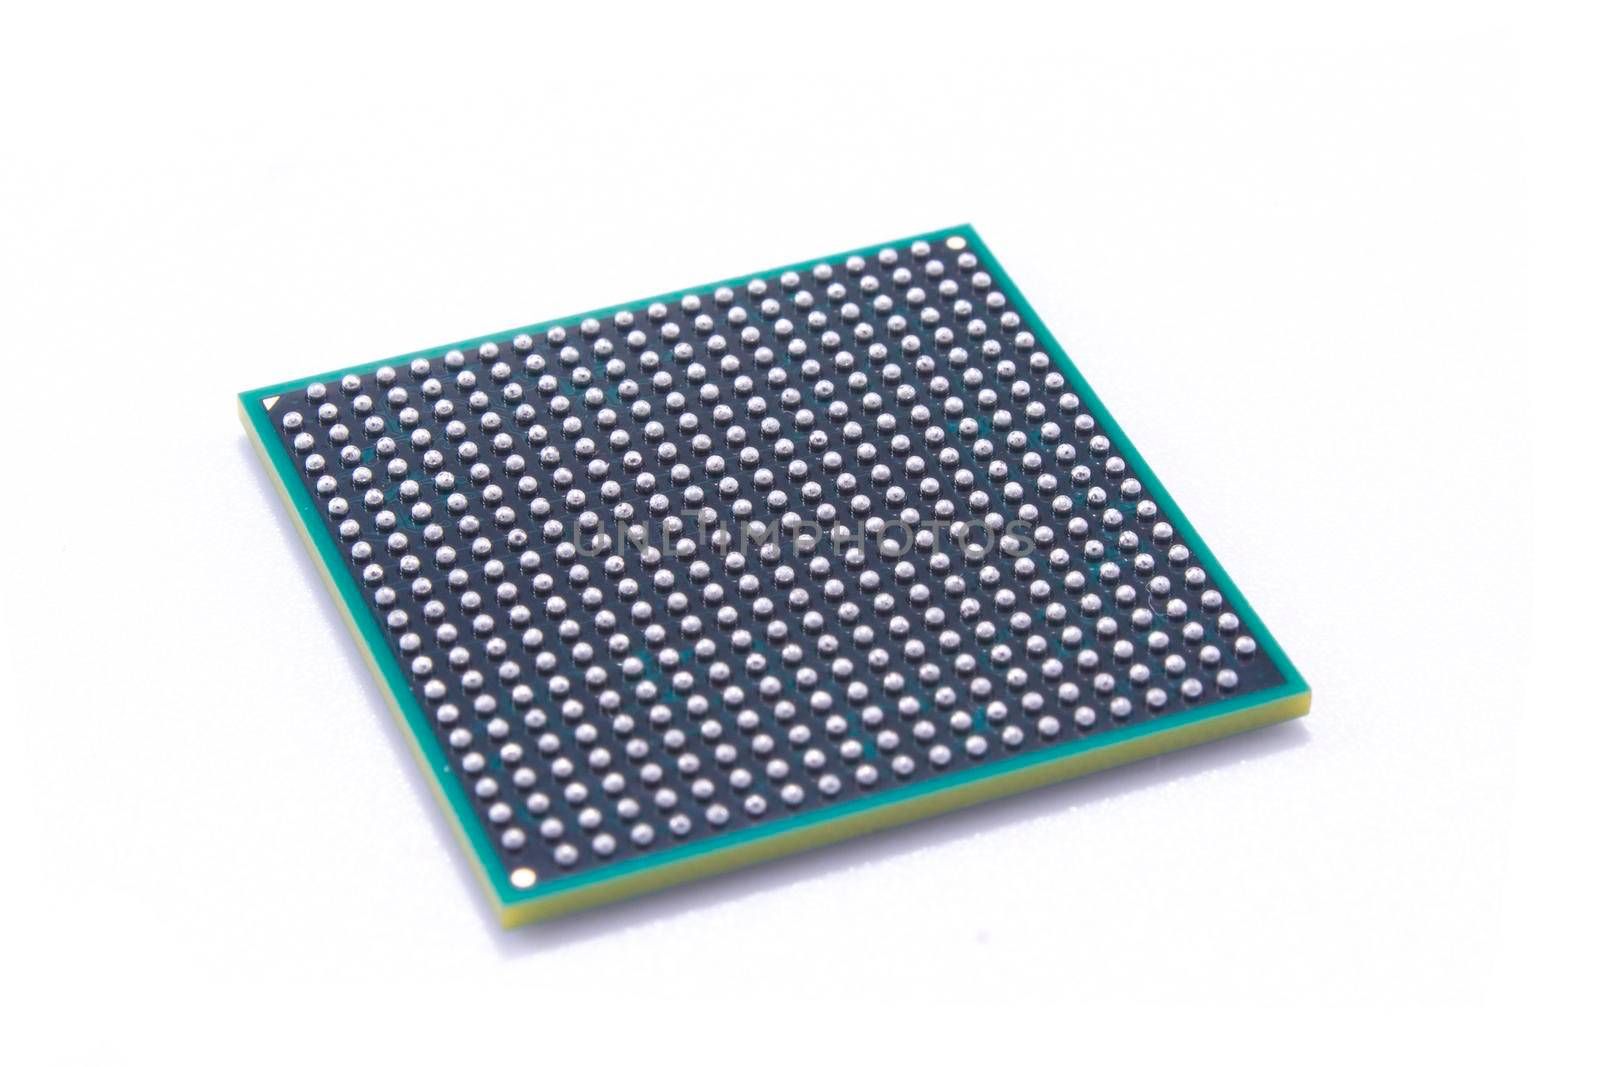 Semiconductor BGA chip on white background